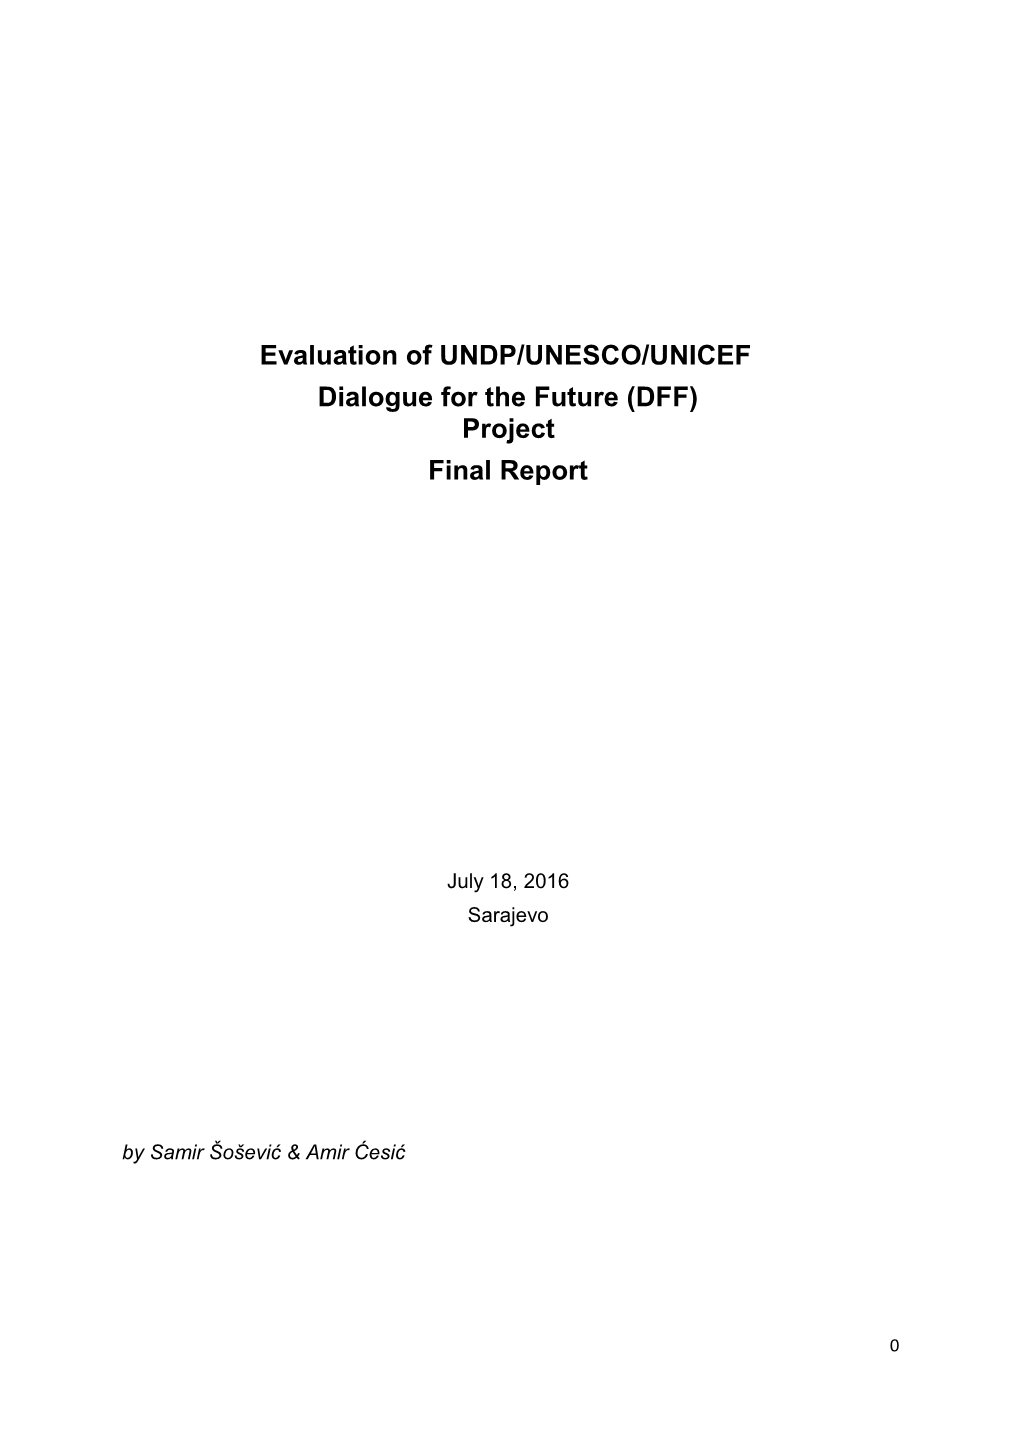 DFF Evaluation Final Report.Pdf